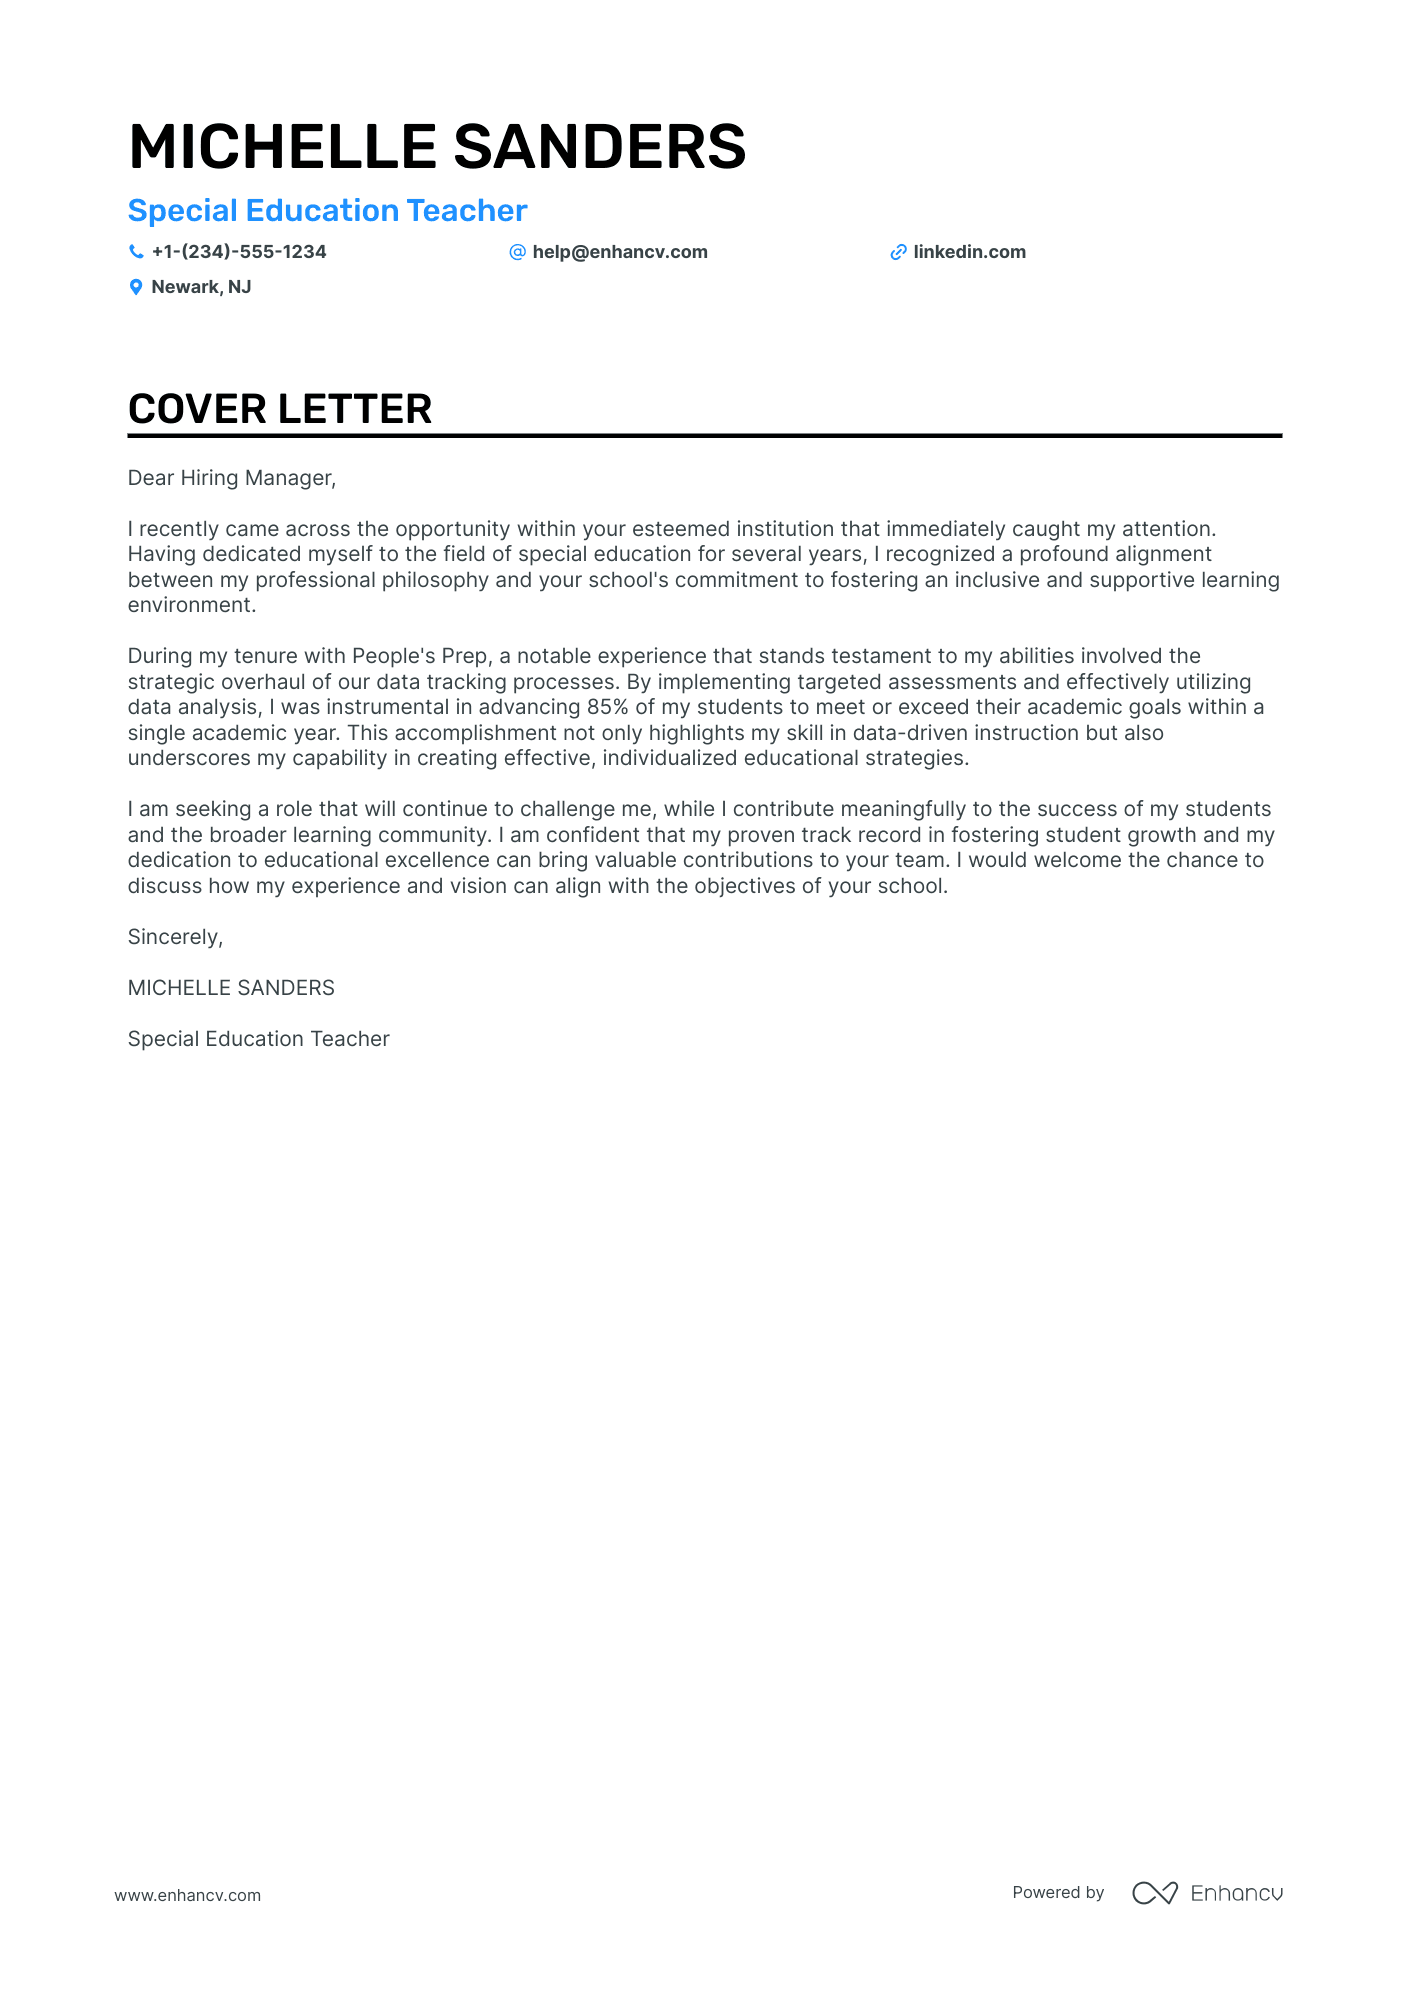 Special Education Teacher Assistant cover letter